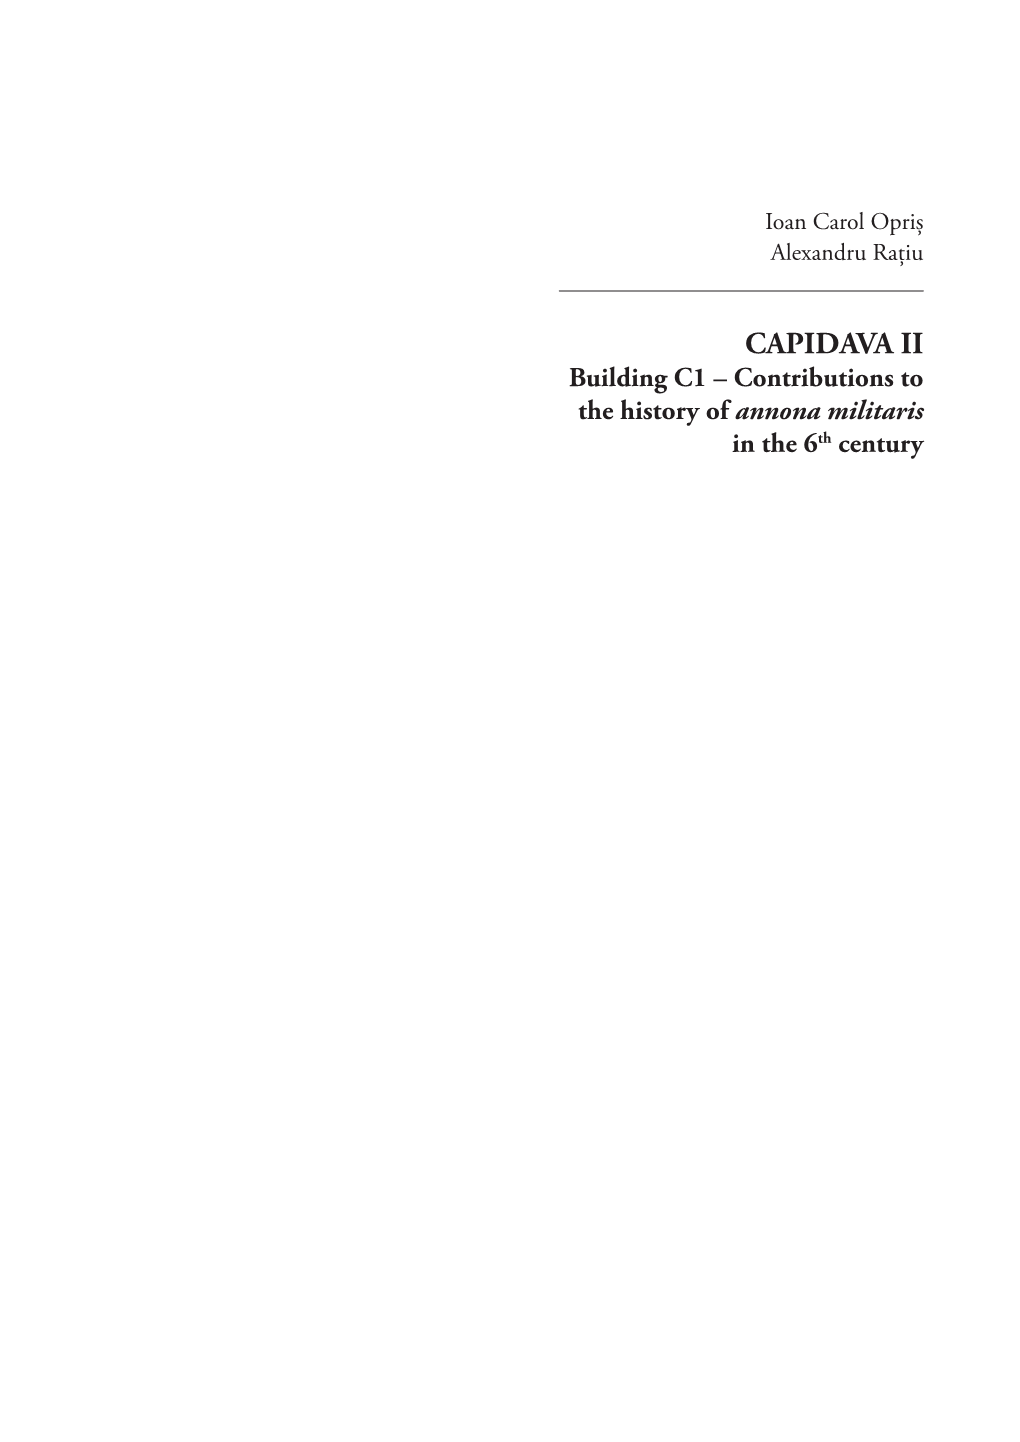 CAPIDAVA II Building C1 – Contributions to the History of Annona Militaris in the 6Th Century Ioan Carol Opriș Alexandru Rațiu